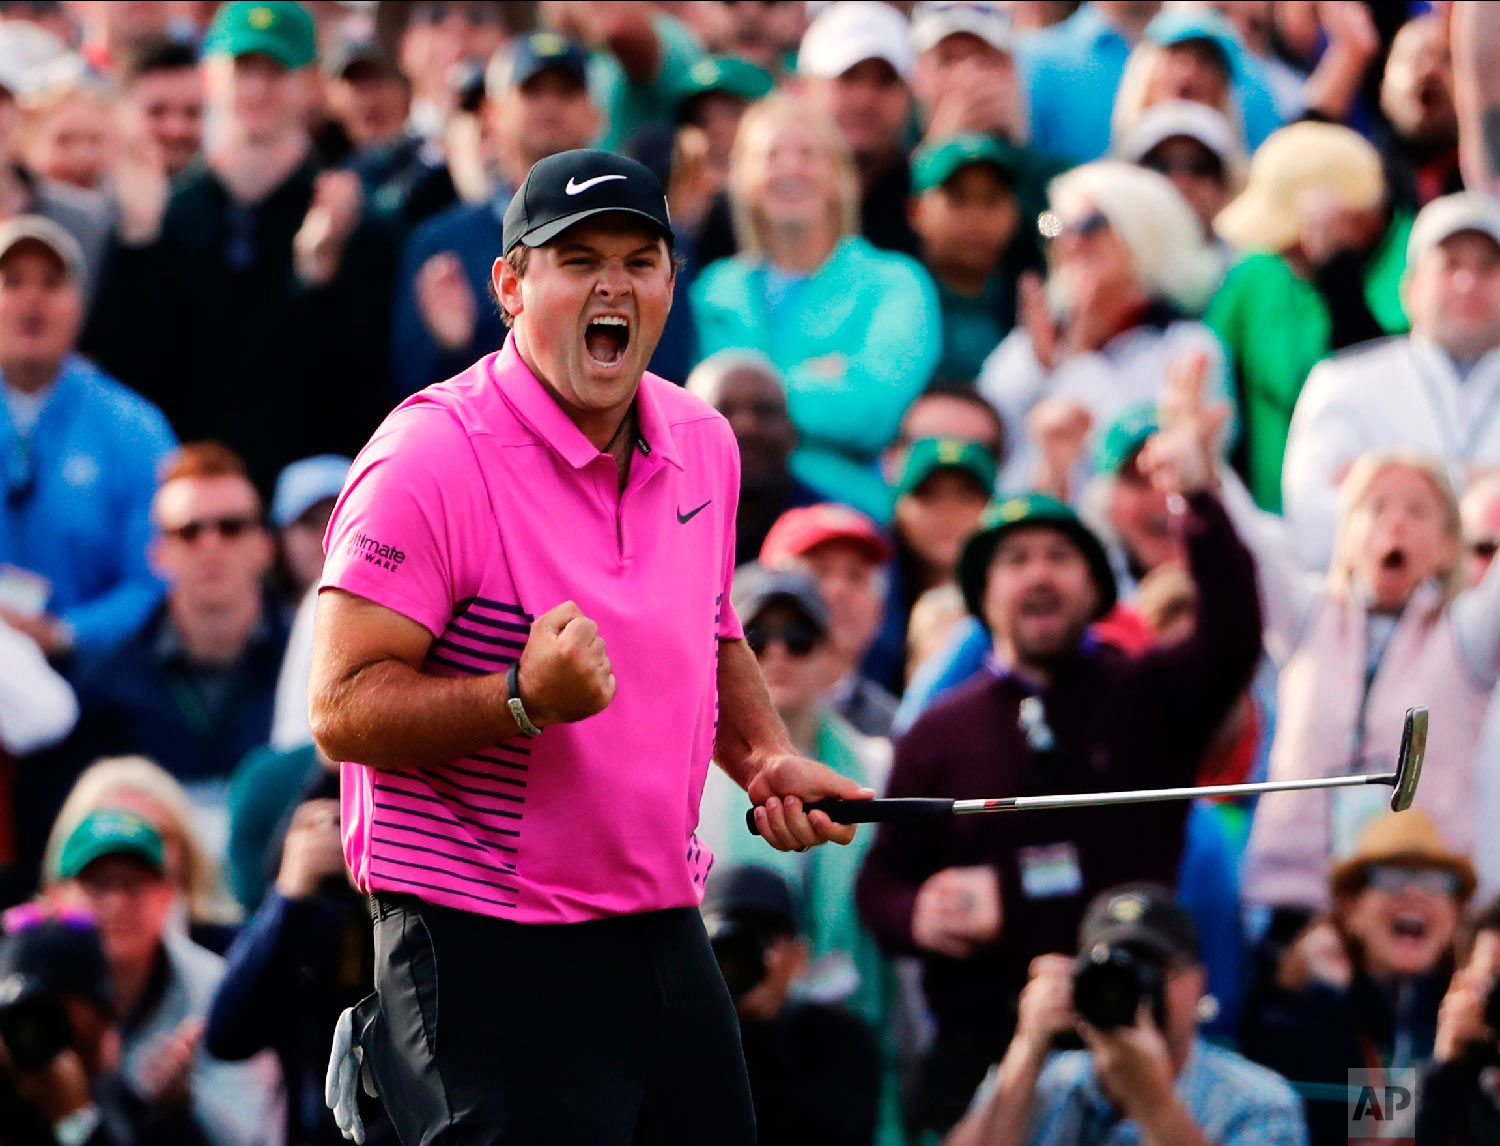  Patrick Reed celebrates after winning the Masters golf tournament on April 8, 2018, in Augusta, Ga. (AP Photo/David Goldman) 